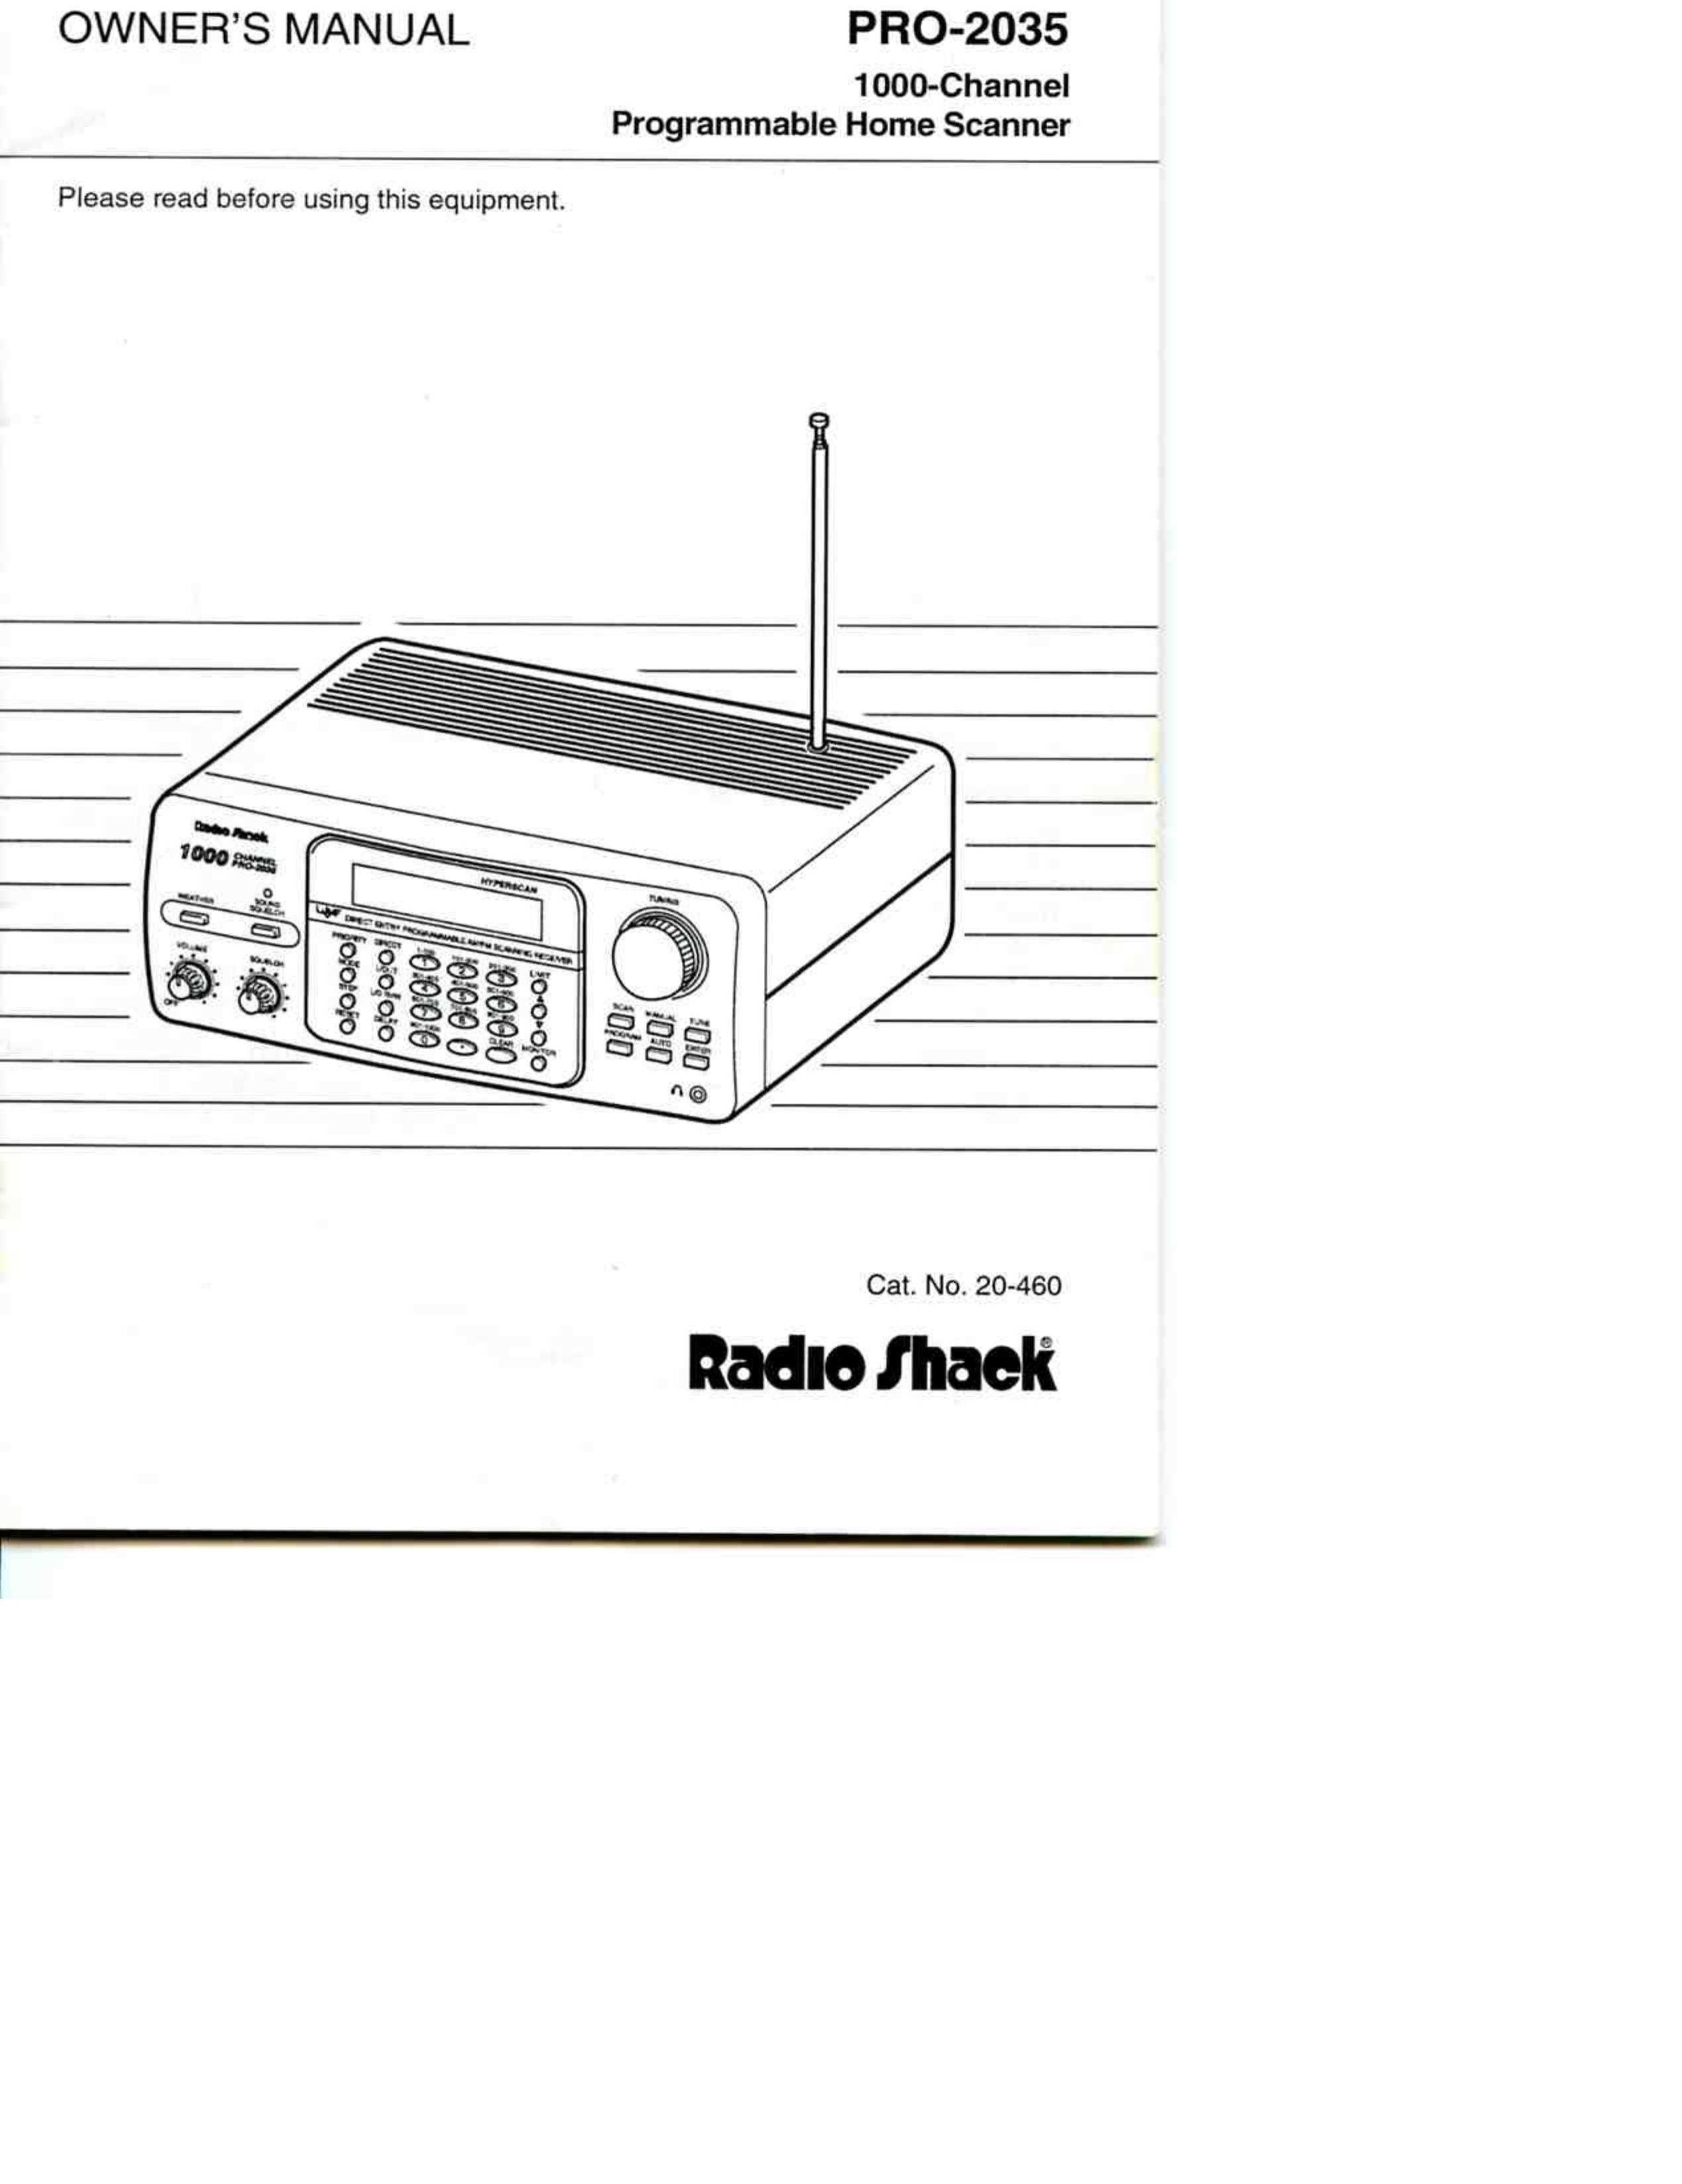 Radio Shack Pro-2035 Weather Radio User Manual